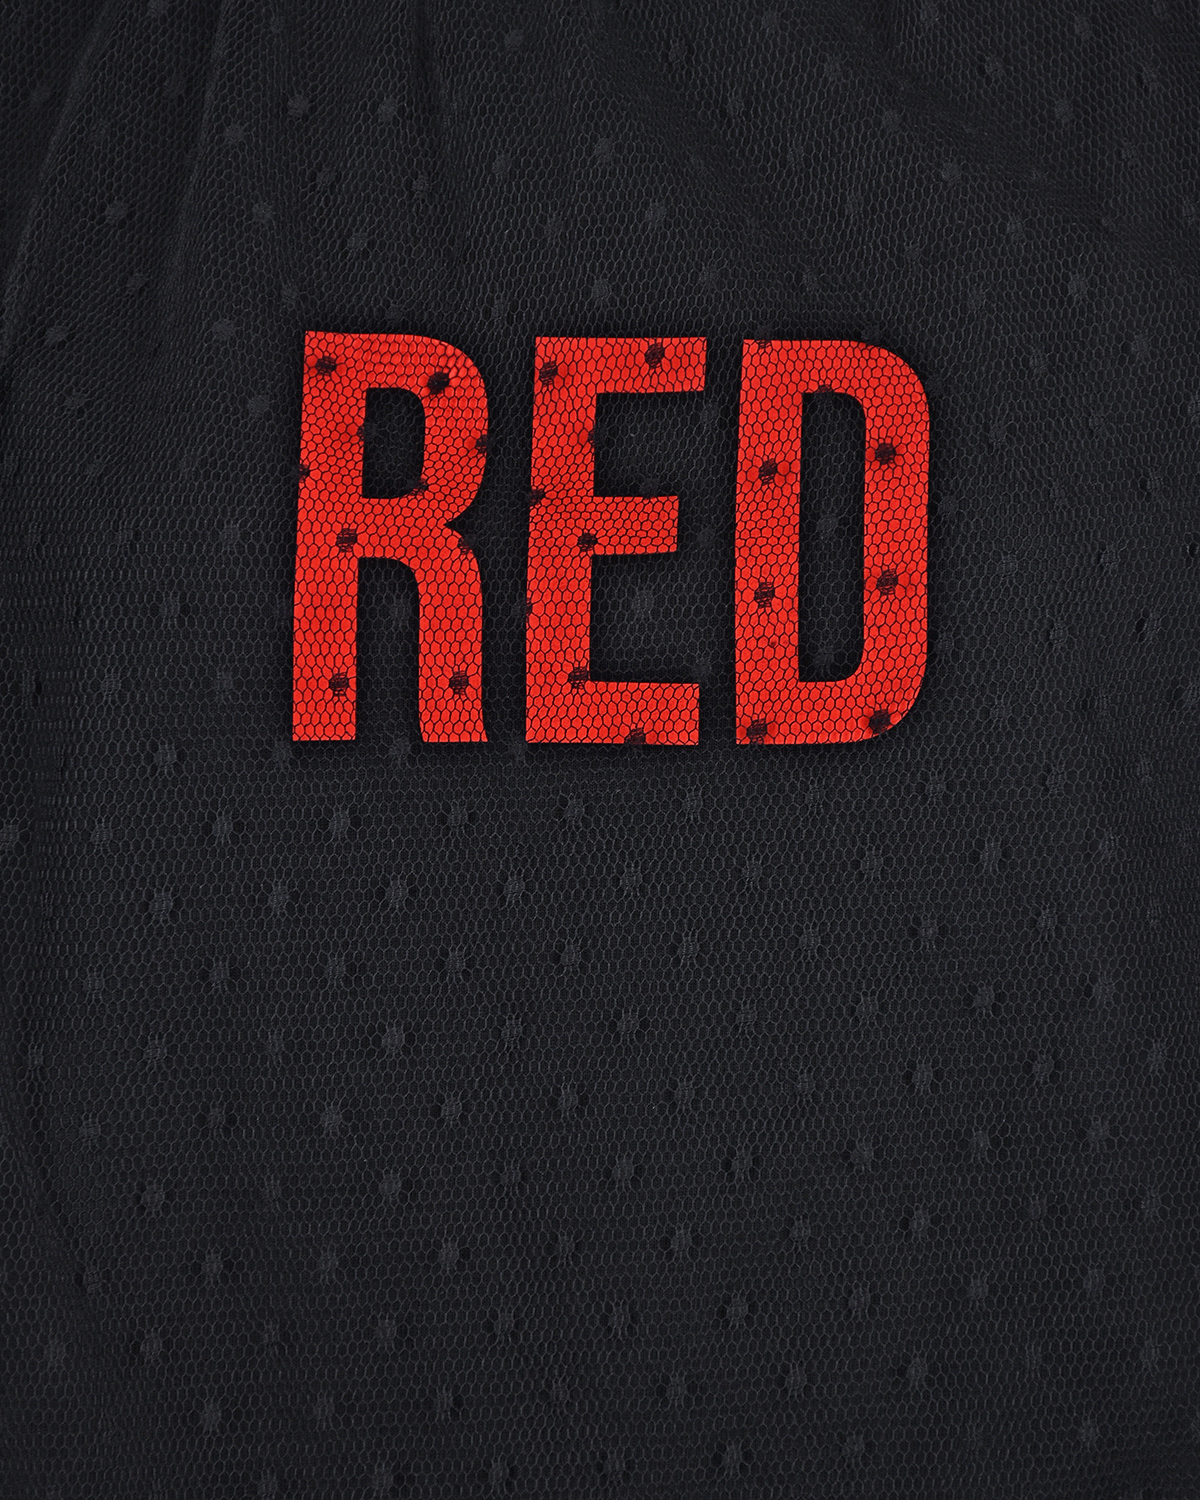 Черный джемпер с рукавами из фатина Red Valentino, размер 38 - фото 7